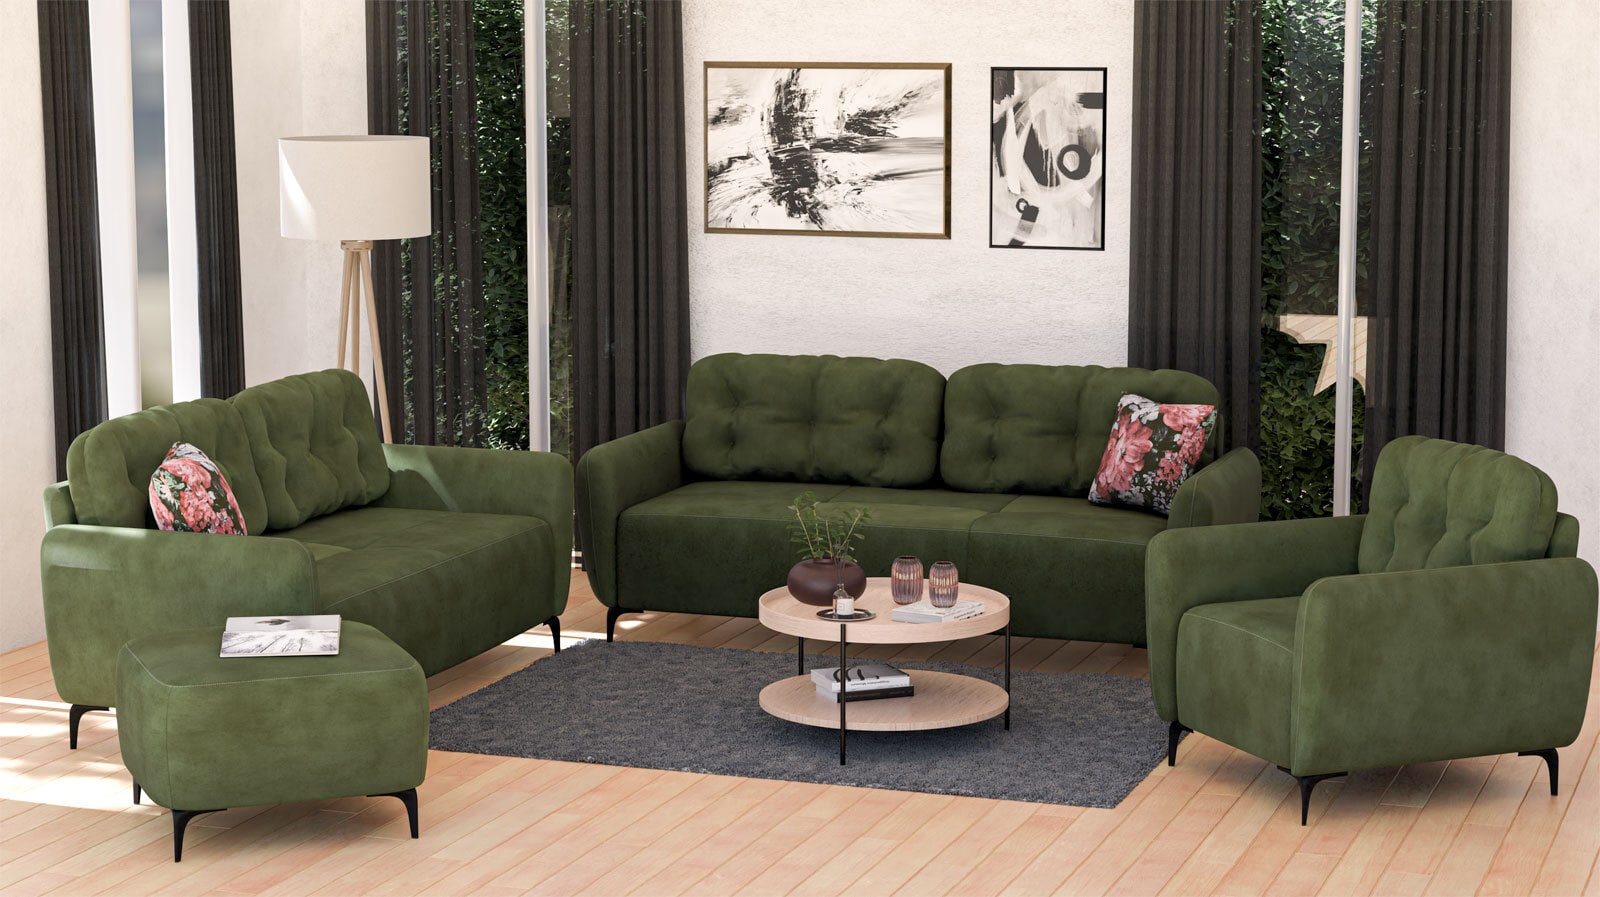 Sofa 3-Sitzer VENTA dunkelgrün